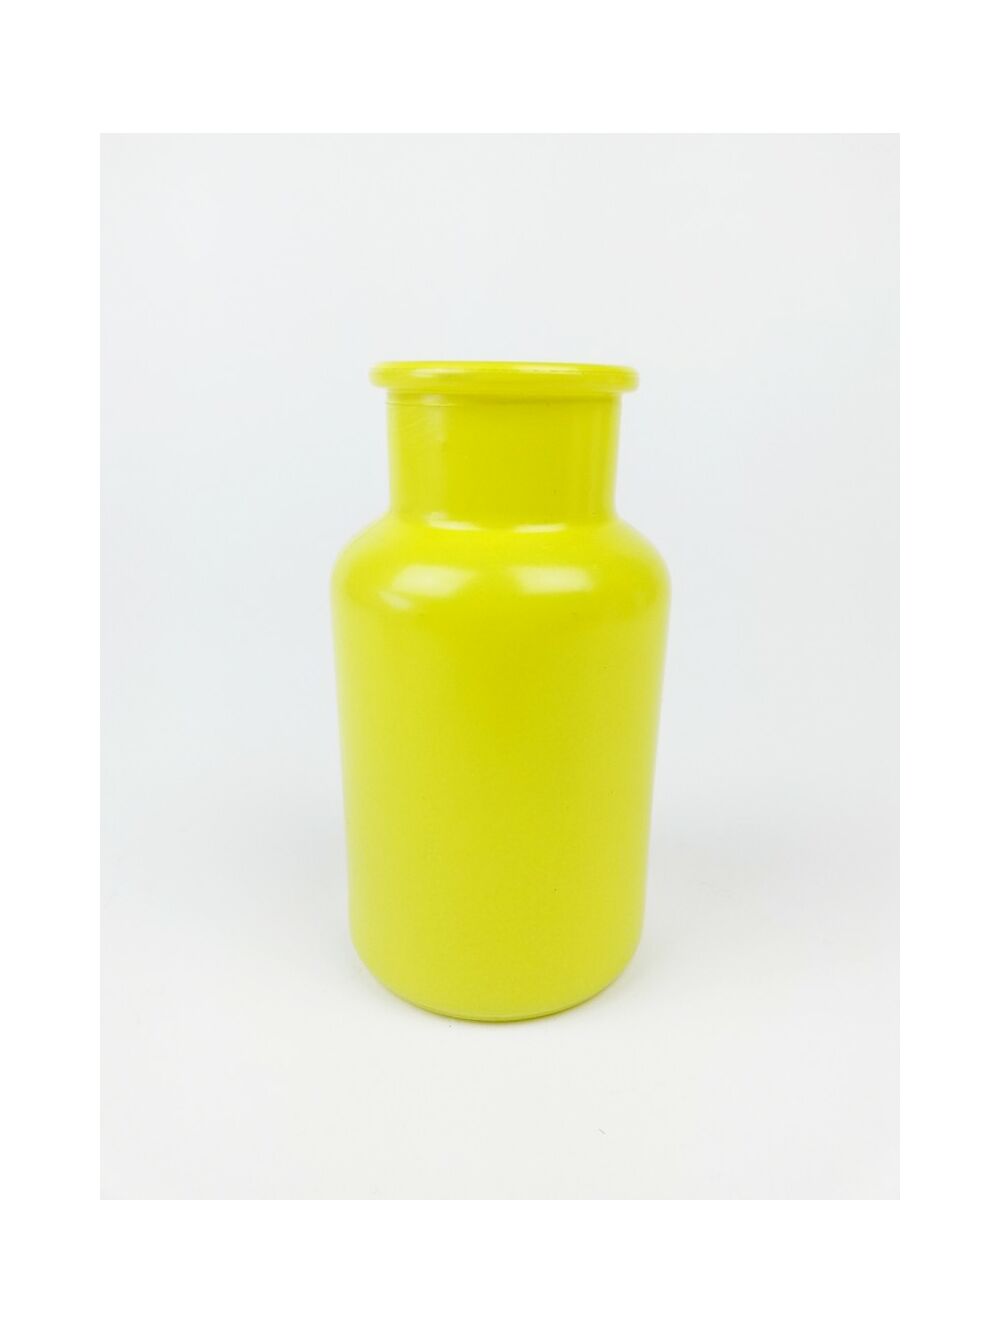 Üveg palack nyakas - Sárga